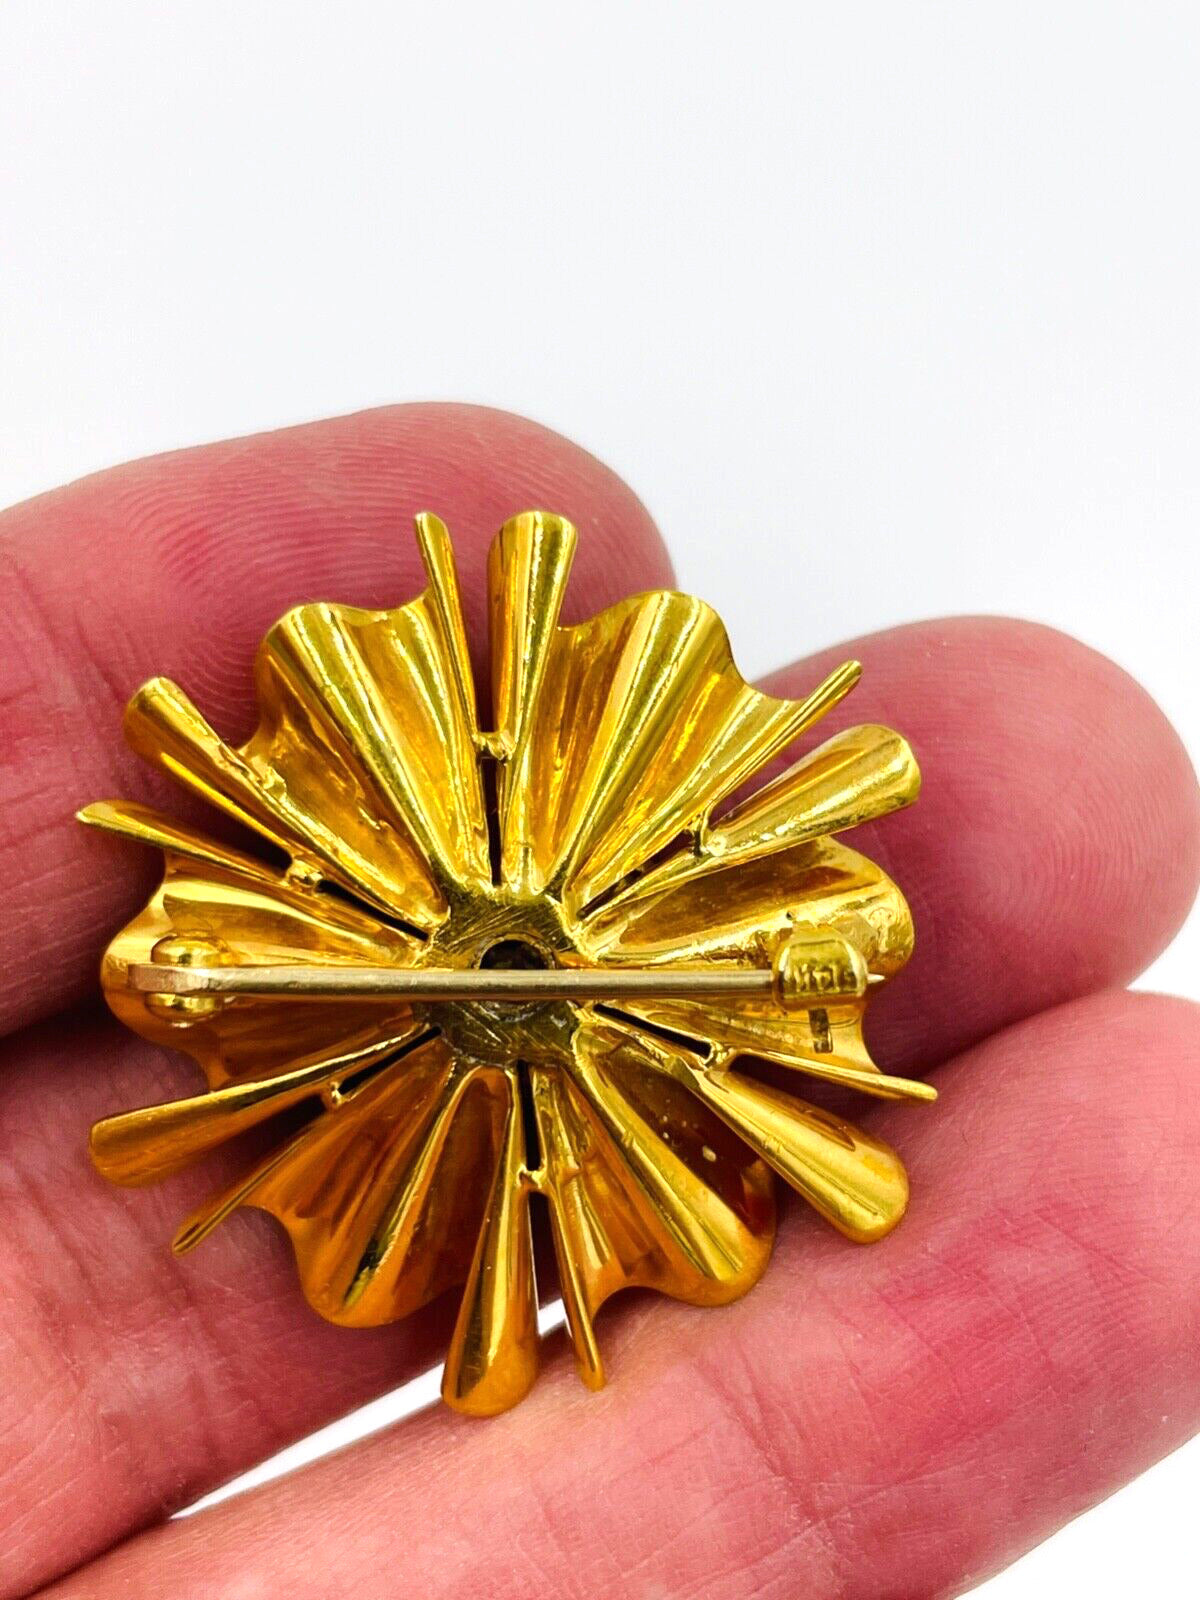 1940's Retro 14k yellow Gold Diamond Ruby Starburst Pin Brooch